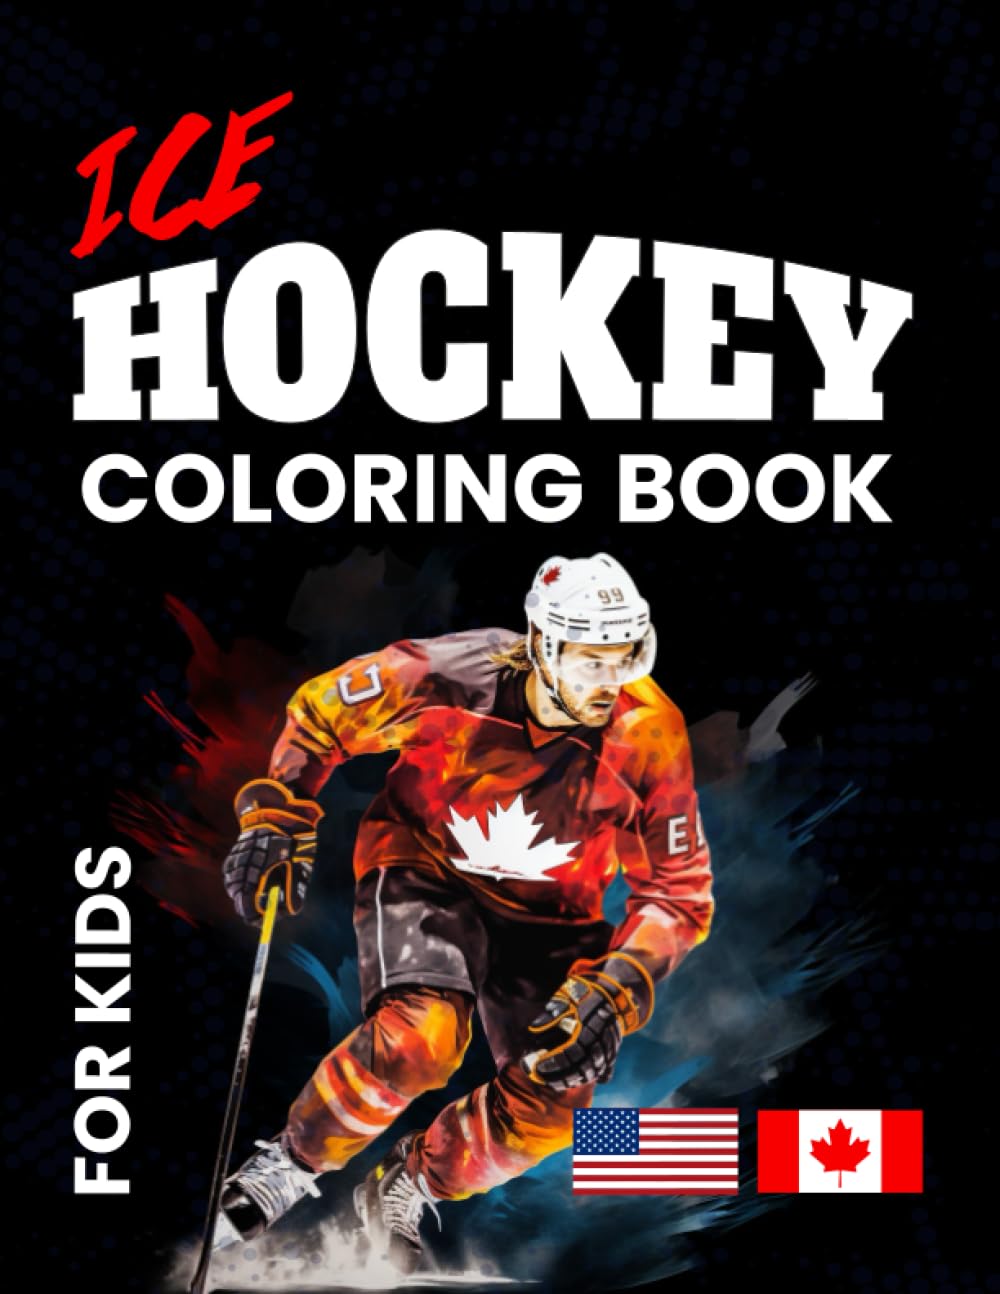 Ice hockey coloring book (색칠공부) for kids [62 페이지]